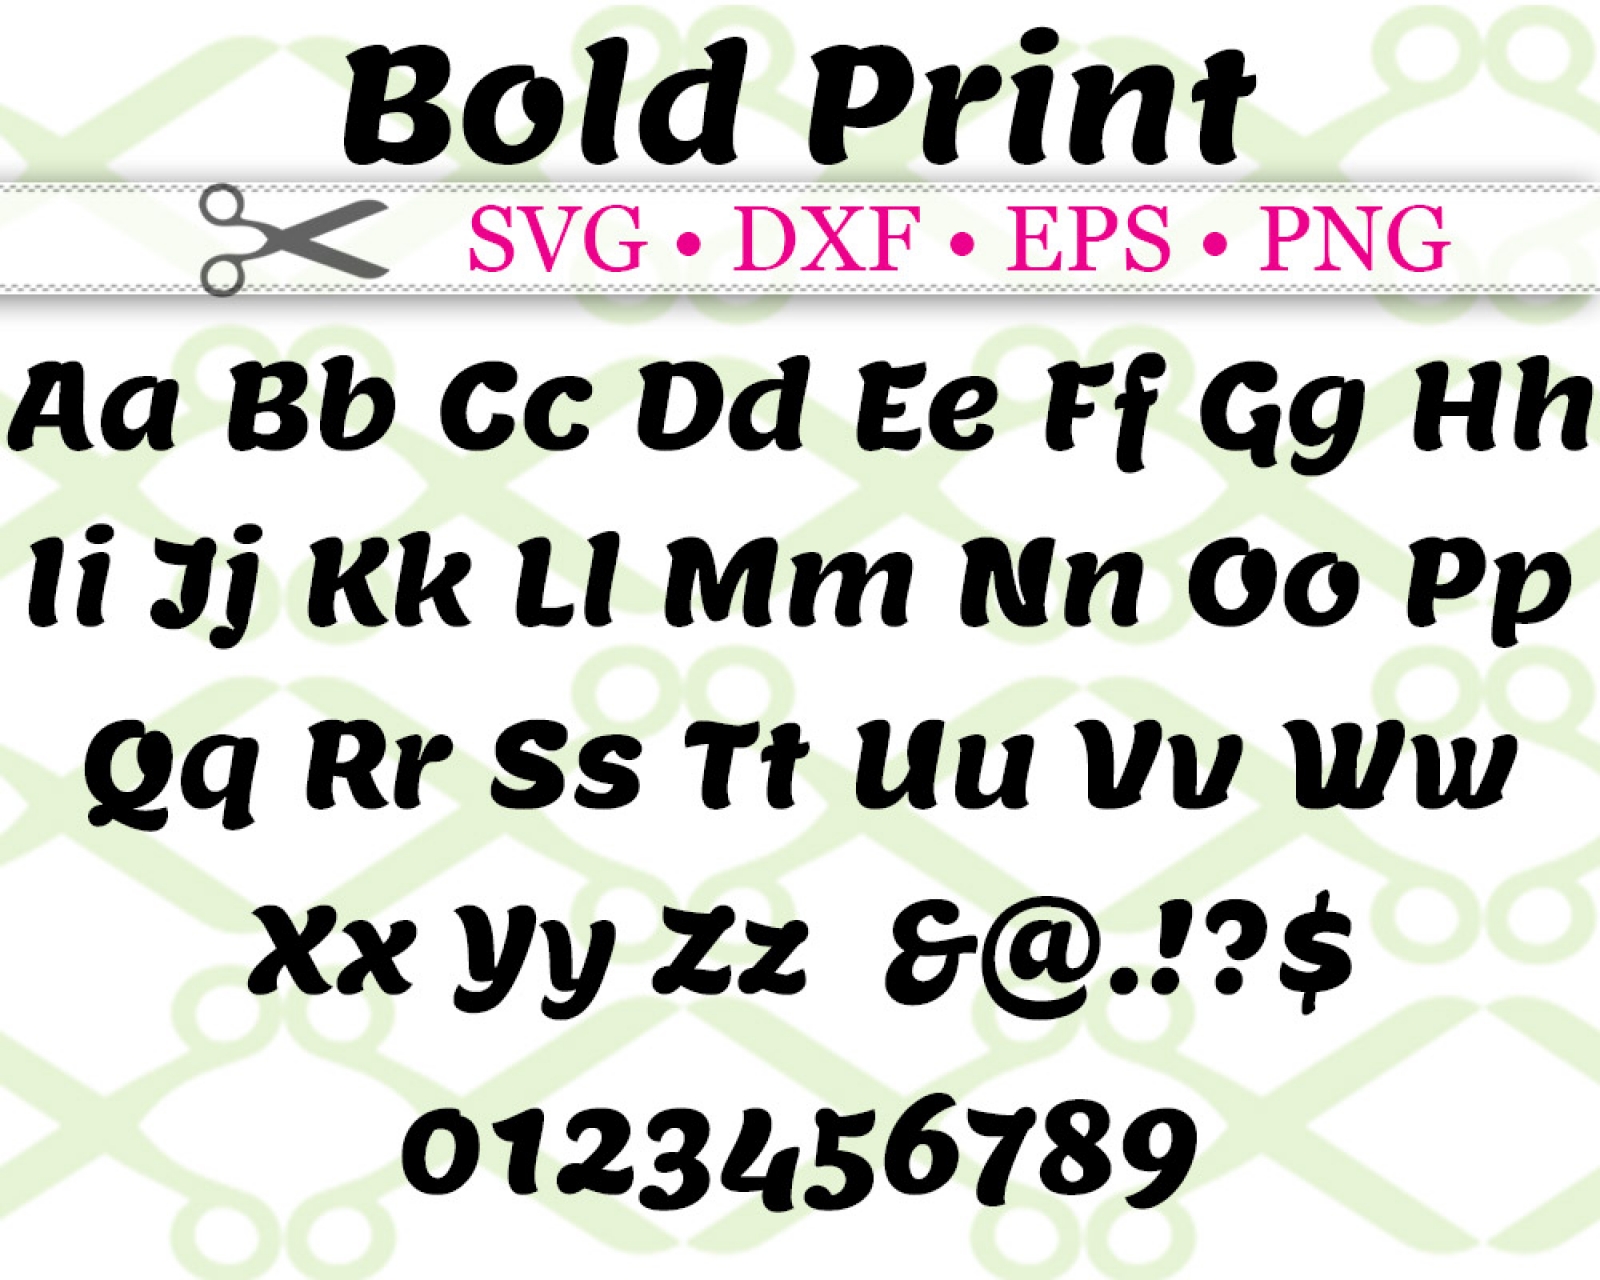 BOLD PRINT SVG FONT -Cricut & Silhouette Files SVG DXF EPS PNG